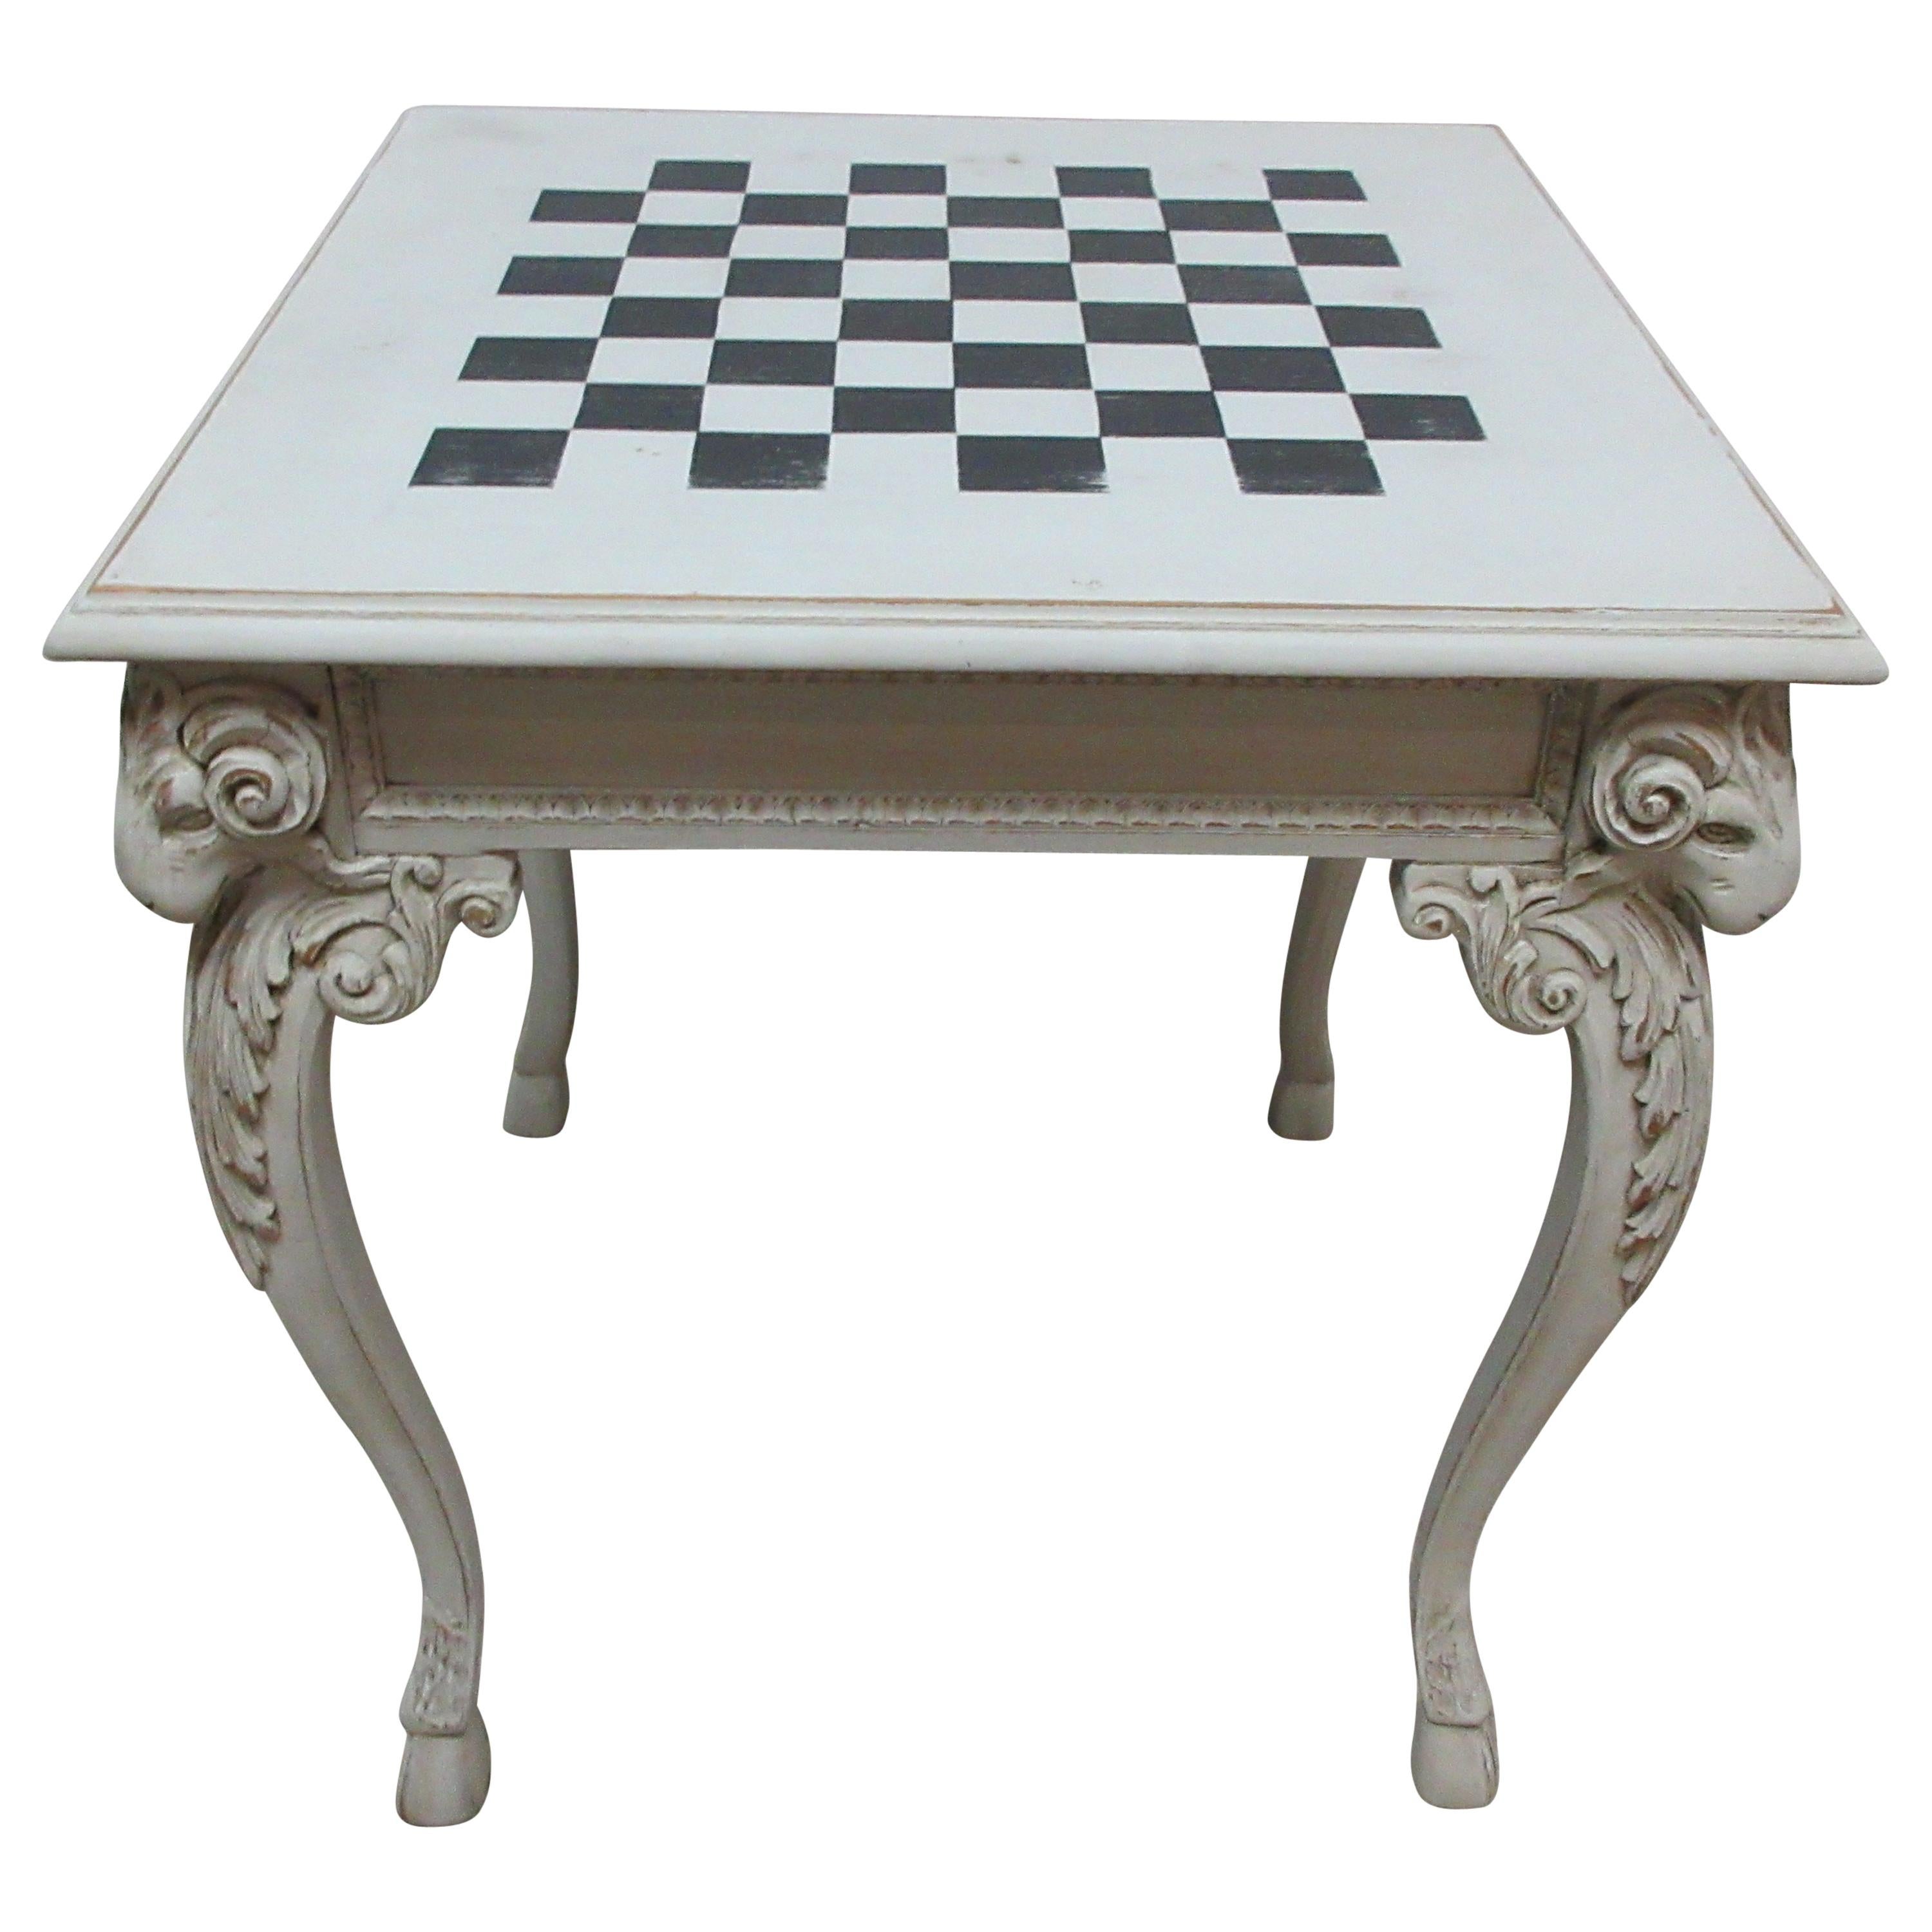 Rams Head Chess Table